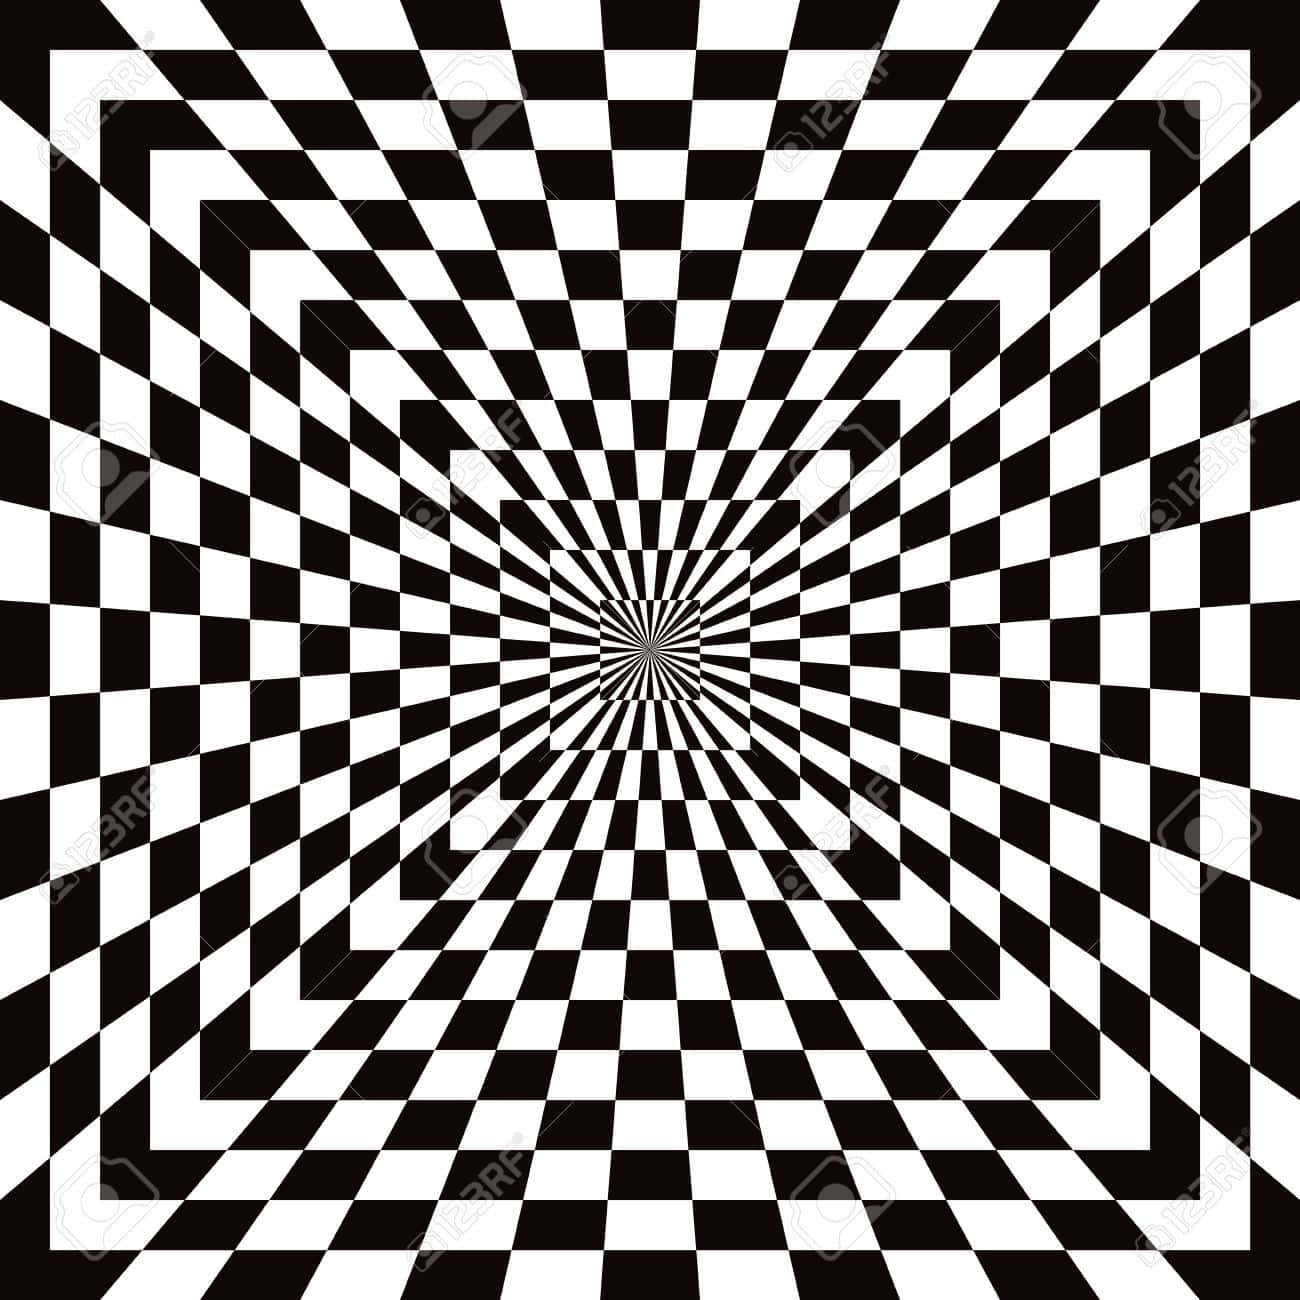 Checkered Tunnel Optical Illusion Picture 1300 x 1300 Picture